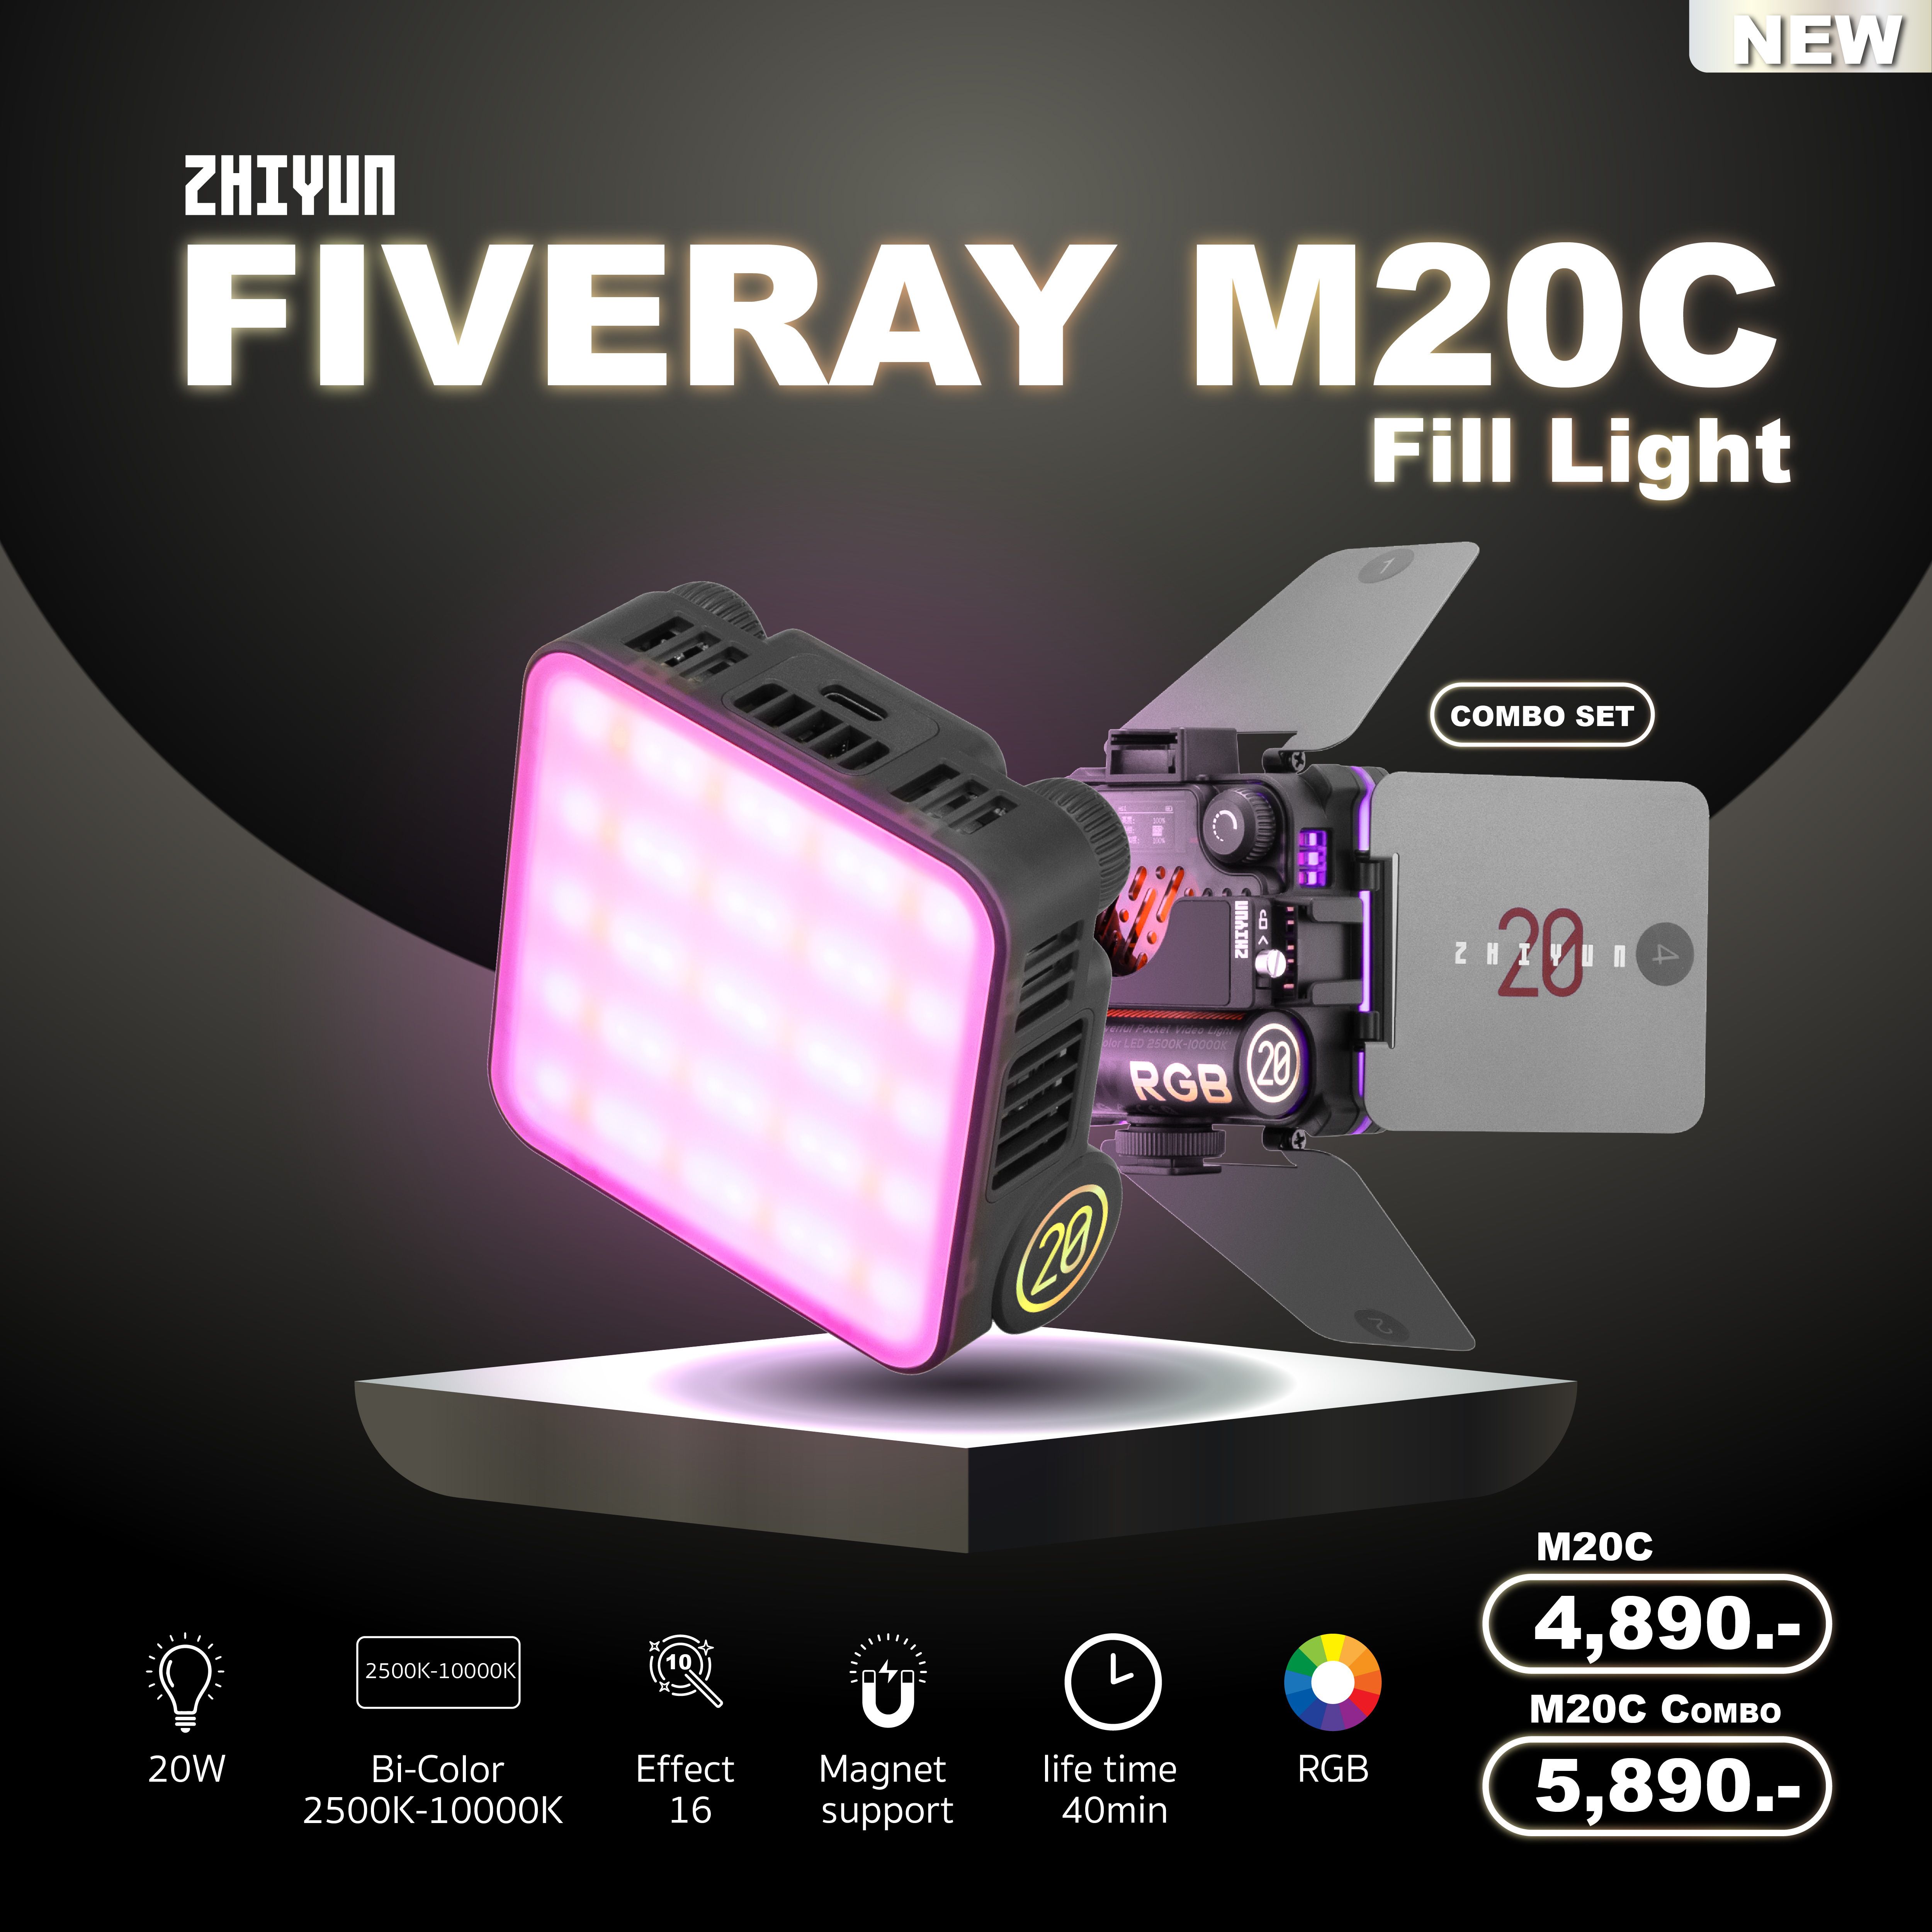 Zhiyun - FIVERAY M20C Fill Light - BIGCamera : ศูนย์รวมกล้อง